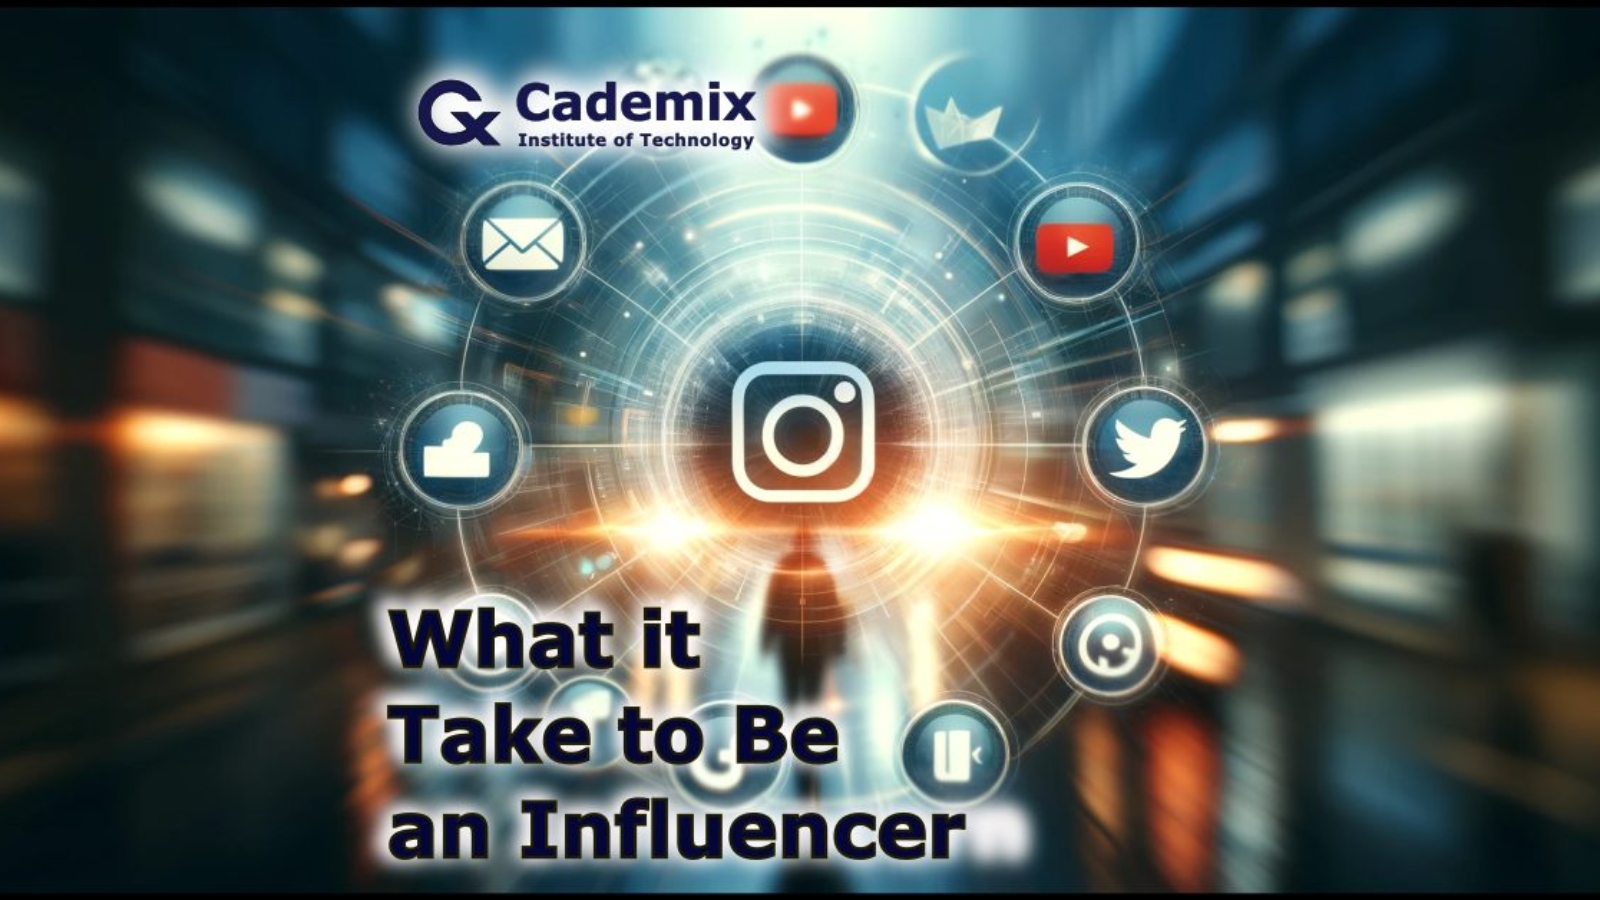 a blurred background incorporating subtle symbols of various social media platforms by Samareh Ghaem Maghami, Cademix Magazine